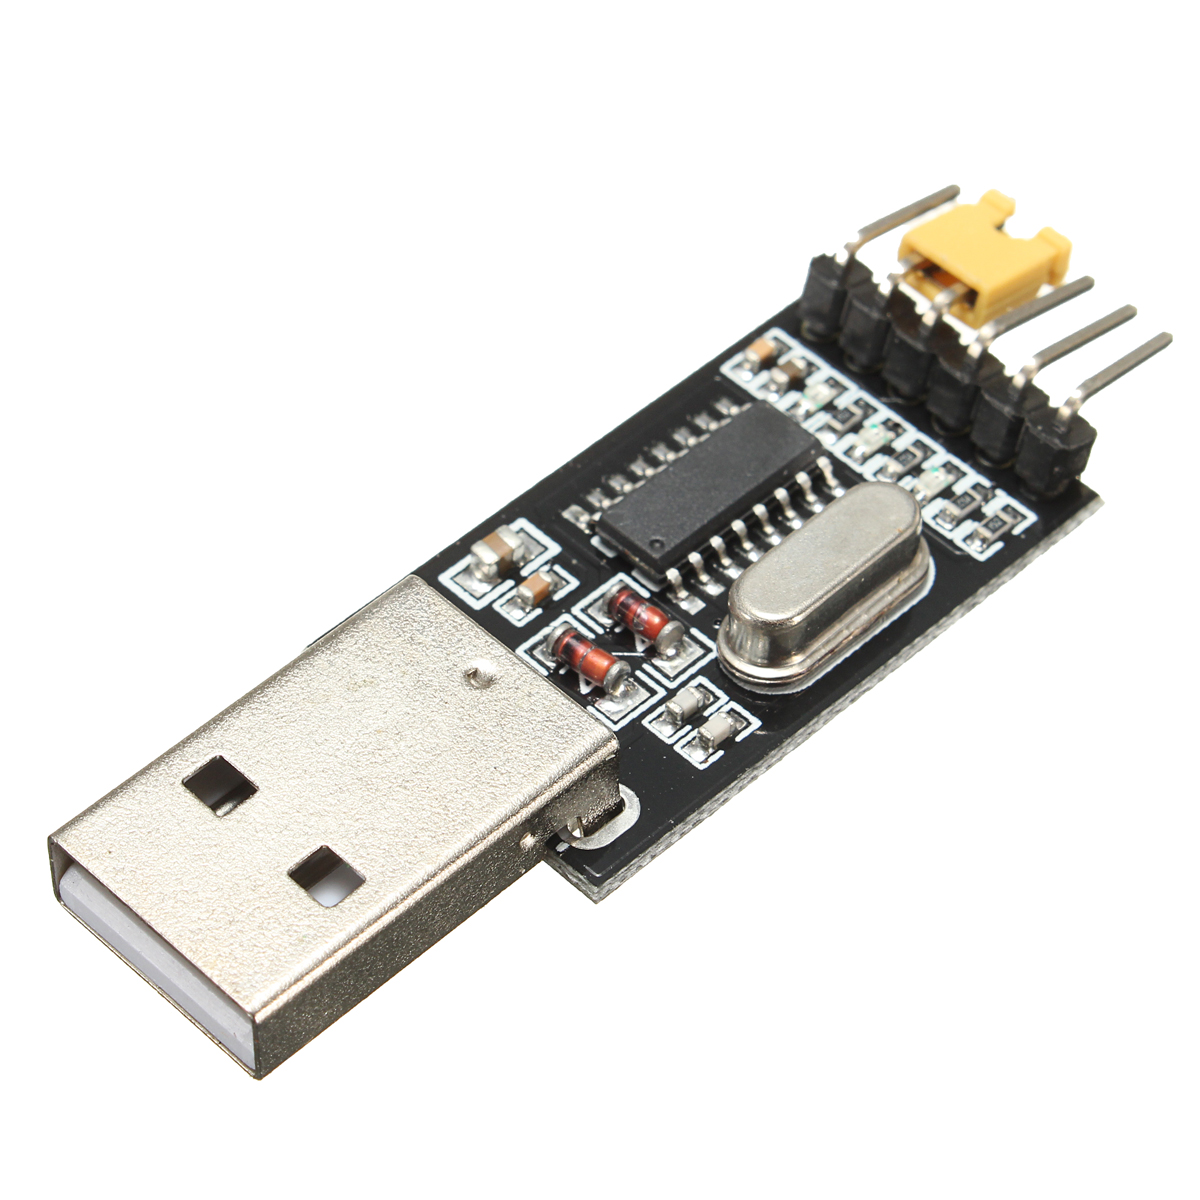 10pcs-33V-5V-USB-to-TTL-Converter-CH340G-UART-Serial-Adapter-Module-STC-1314967-1